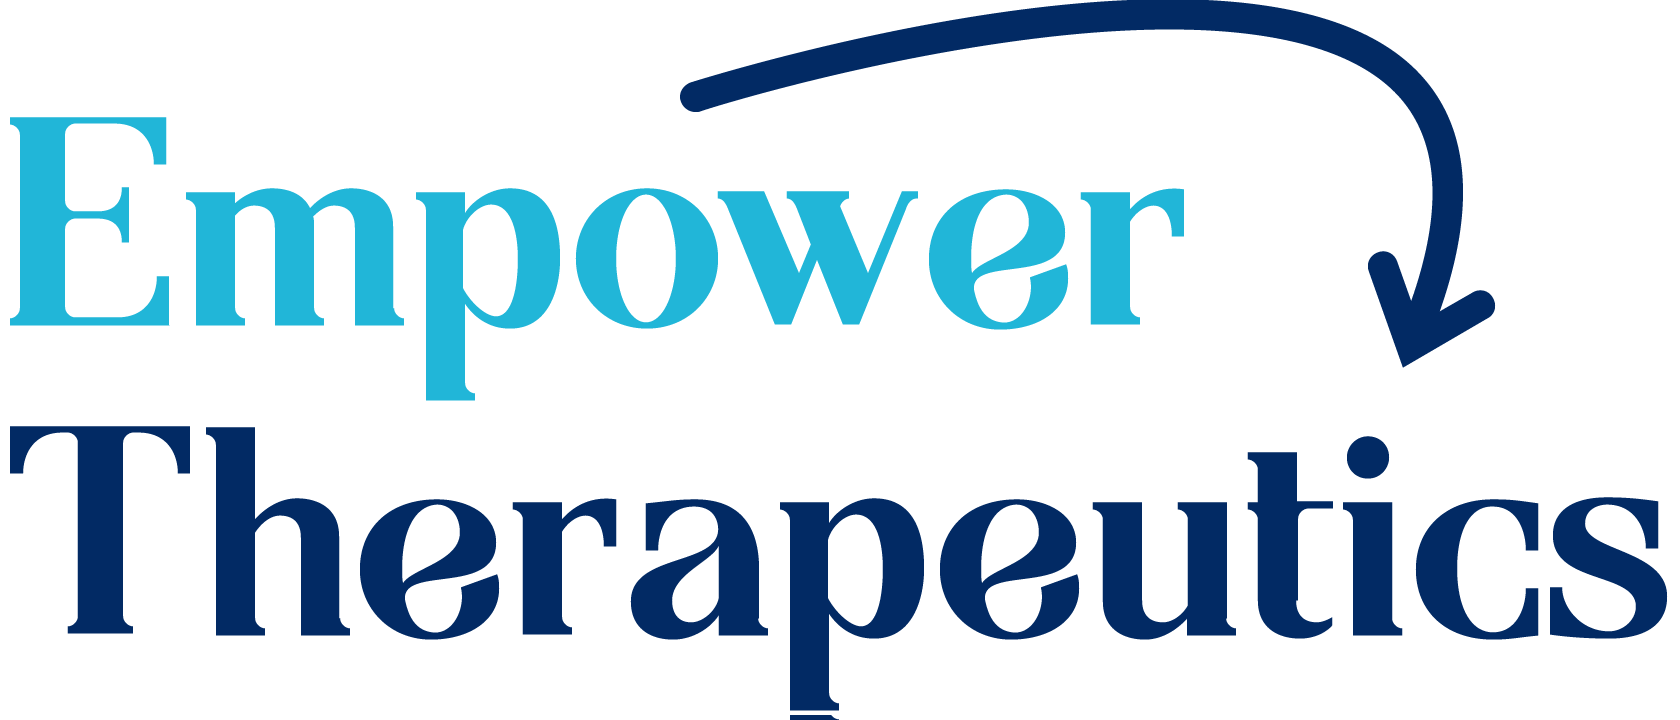 Empower Therapeutics